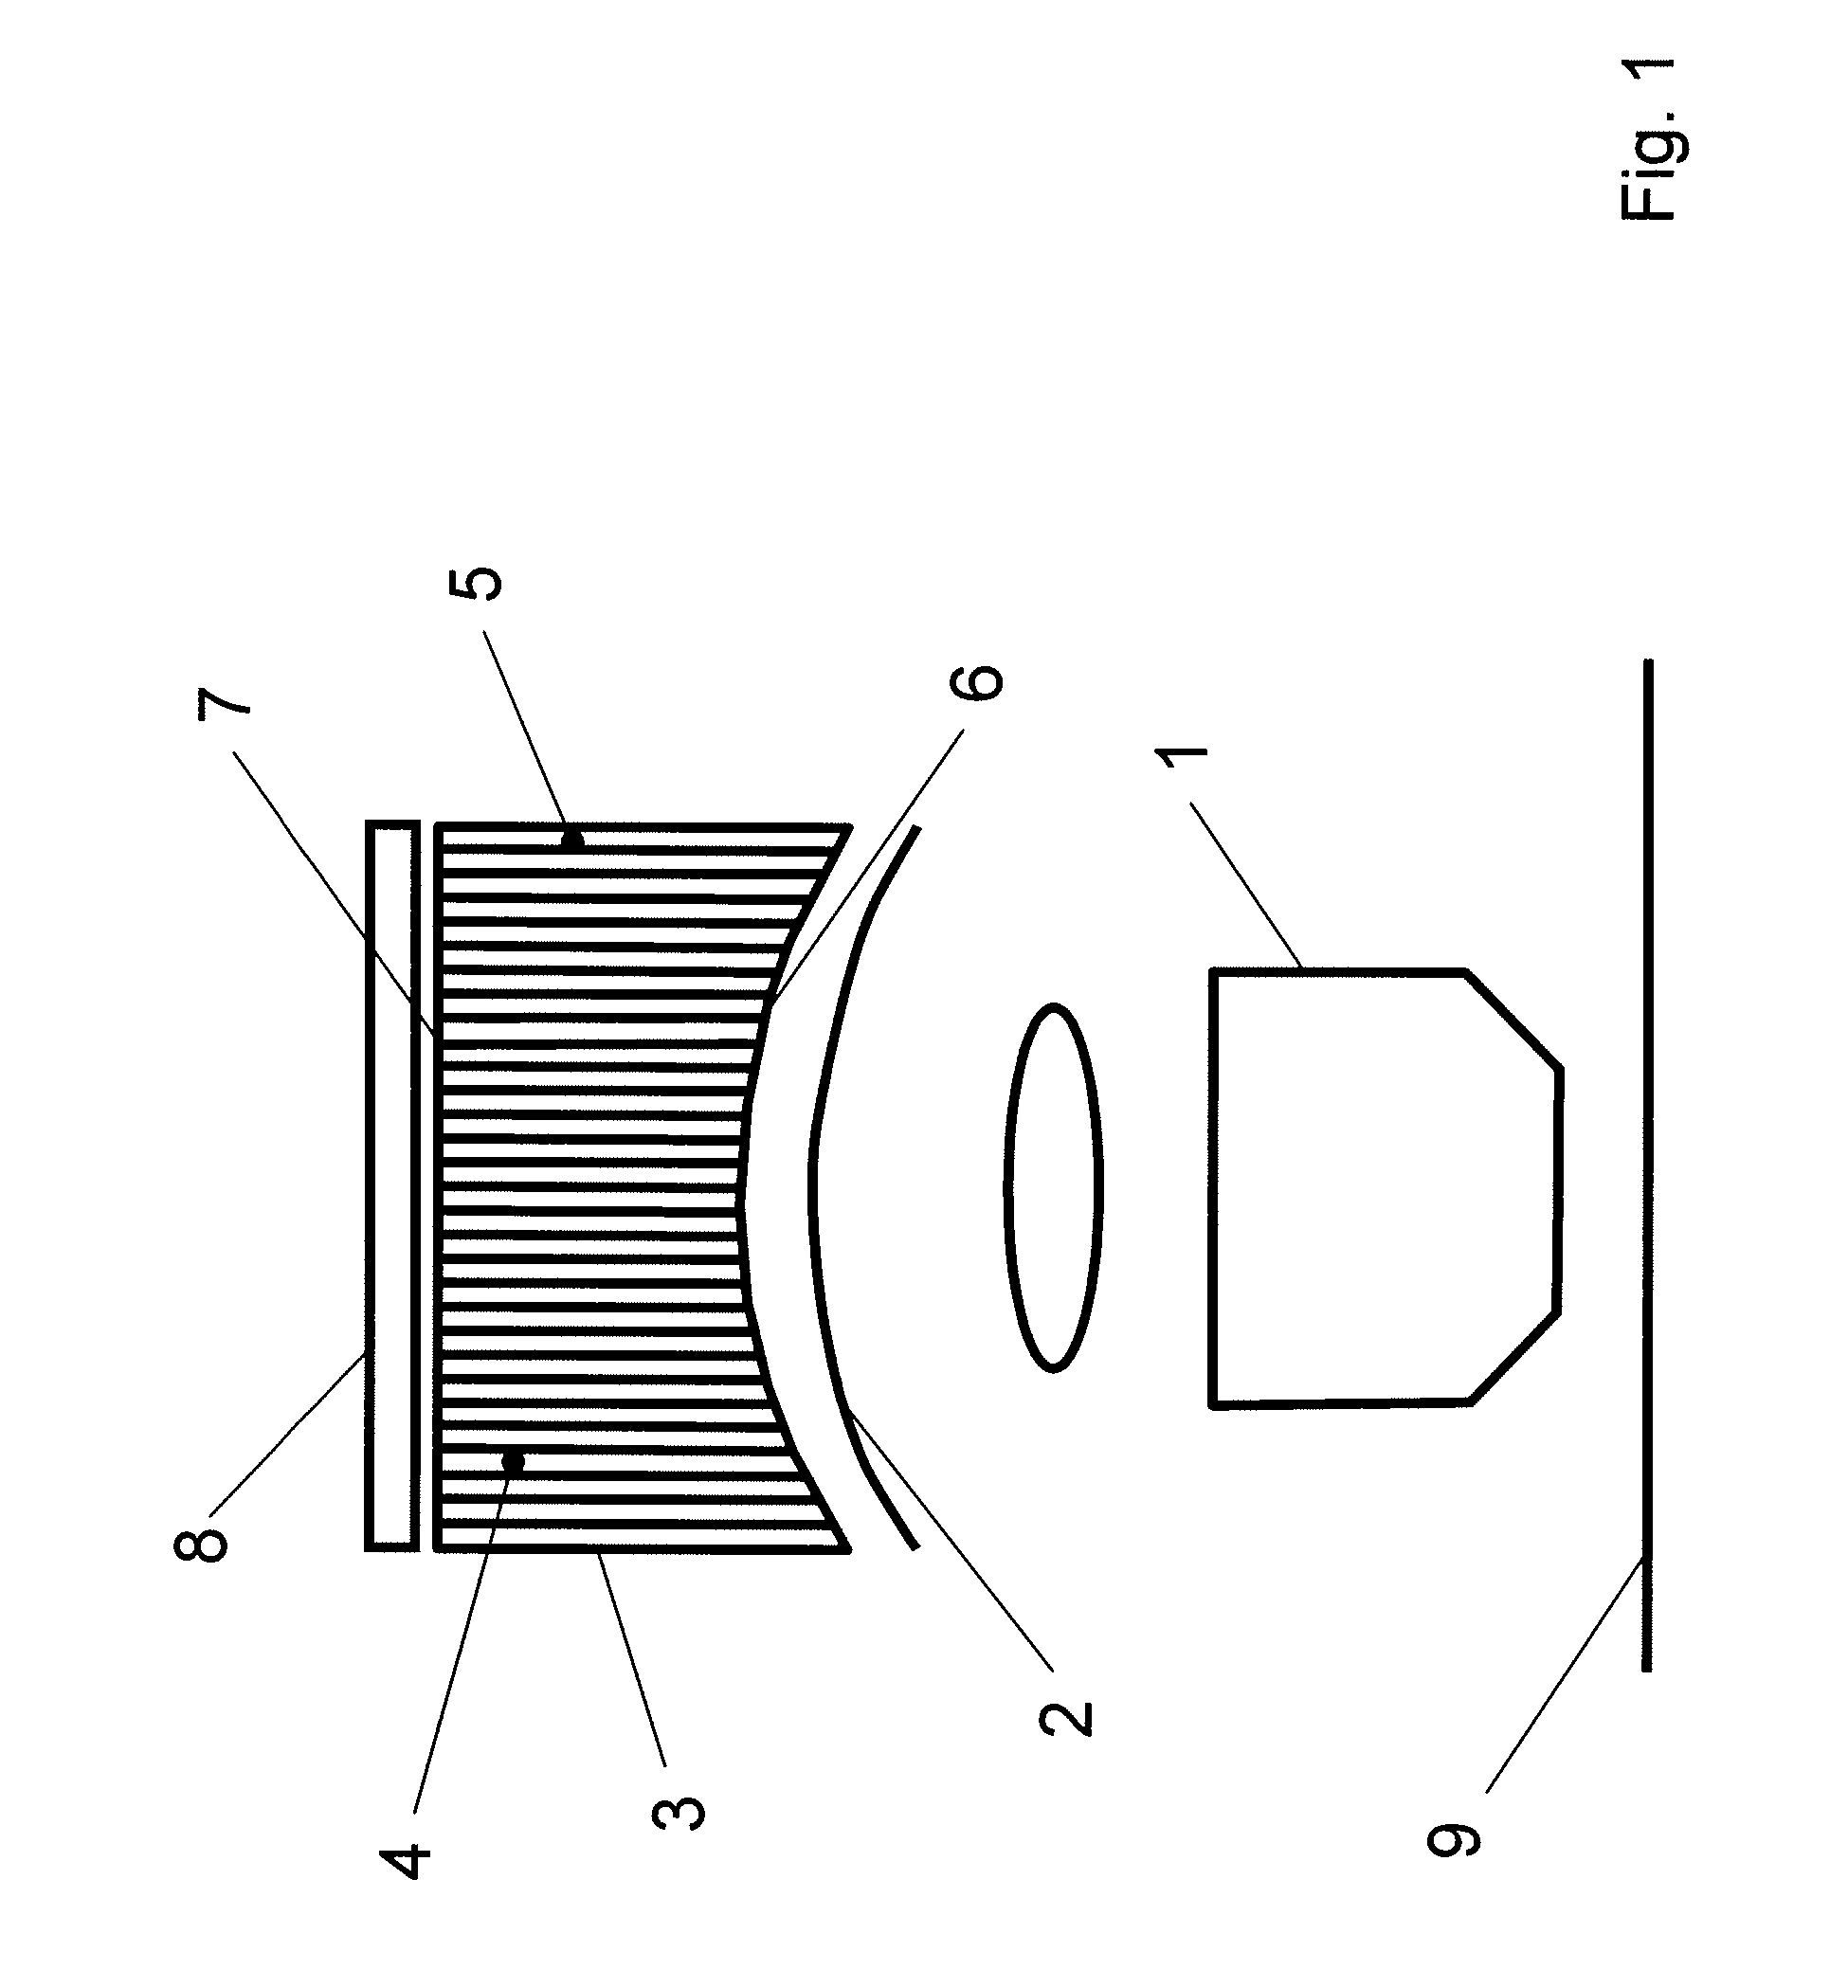 Optical arrangement and a microscope